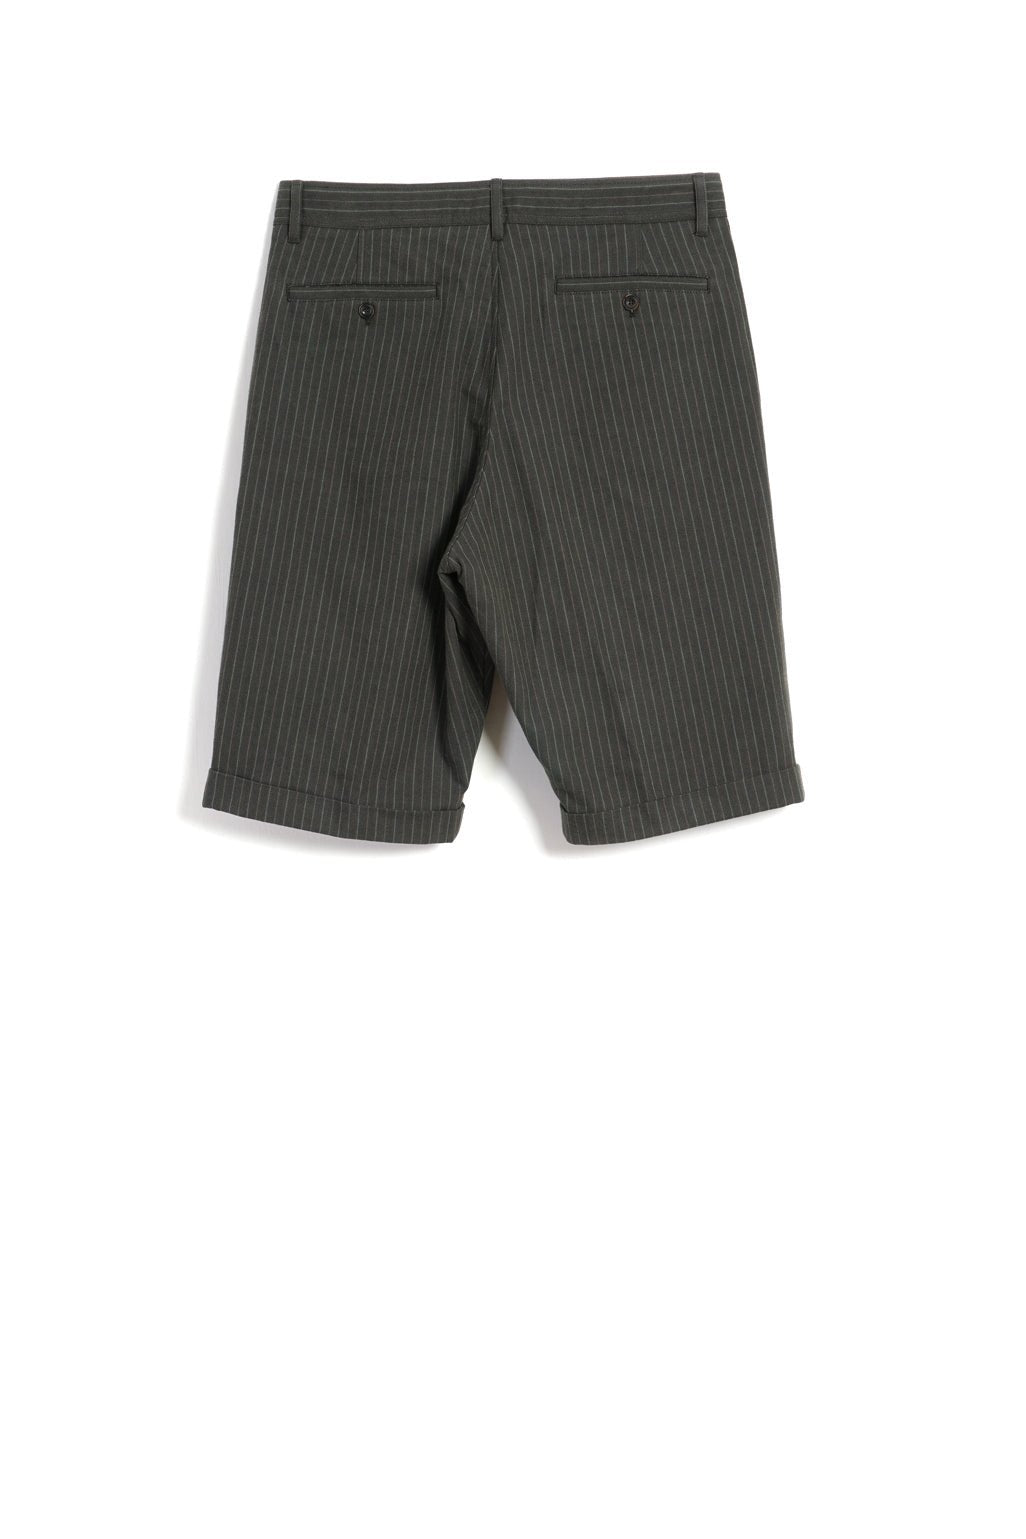 HANSEN GARMENTS - BIRK | Single Pleated Shorts | Khaki Pin - HANSEN Garments